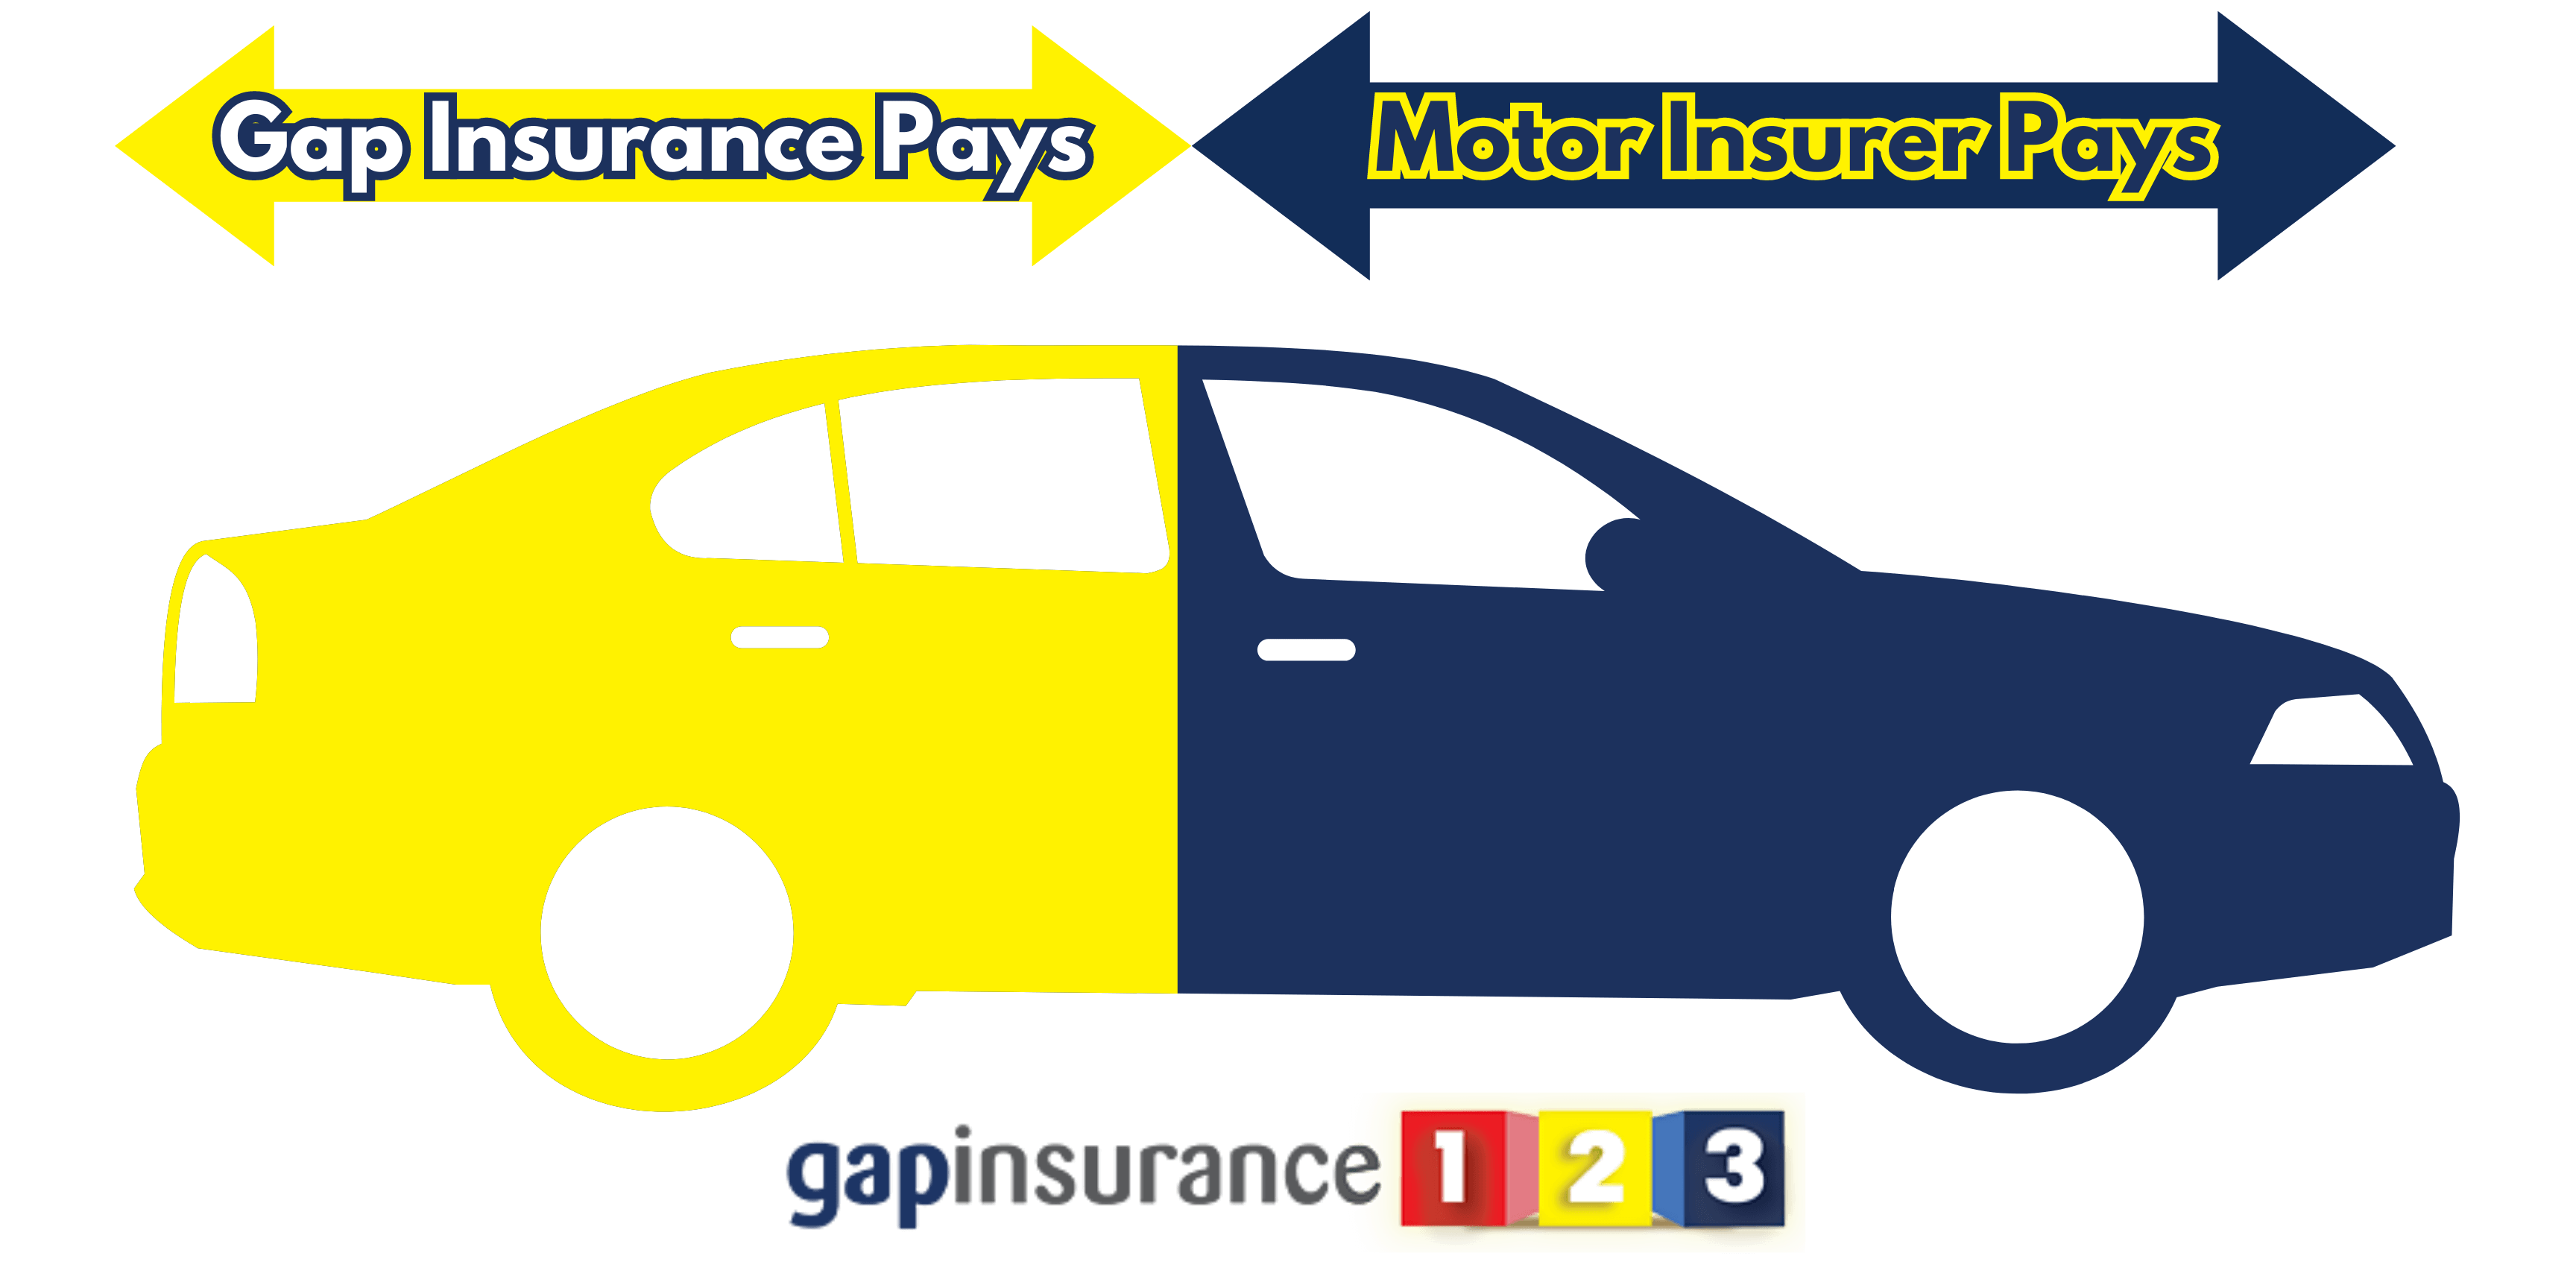 Gap Insurance payout